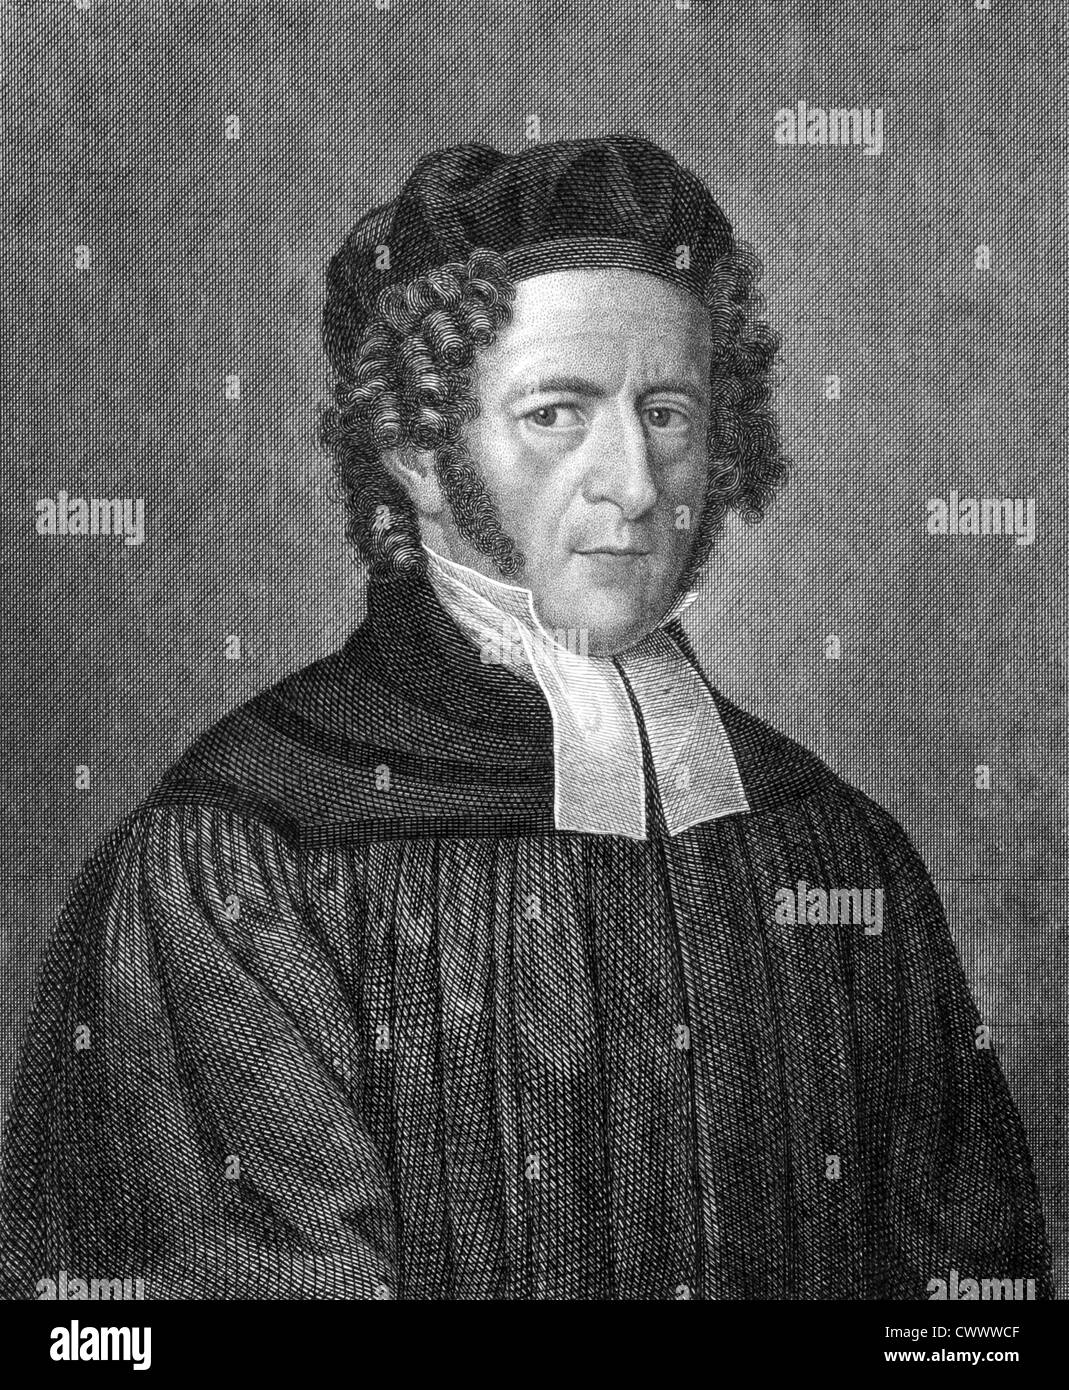 Moritz Ferdinand Schmaltz (1785-1860) on engraving from 1859. German Lutheran theologian. Stock Photo